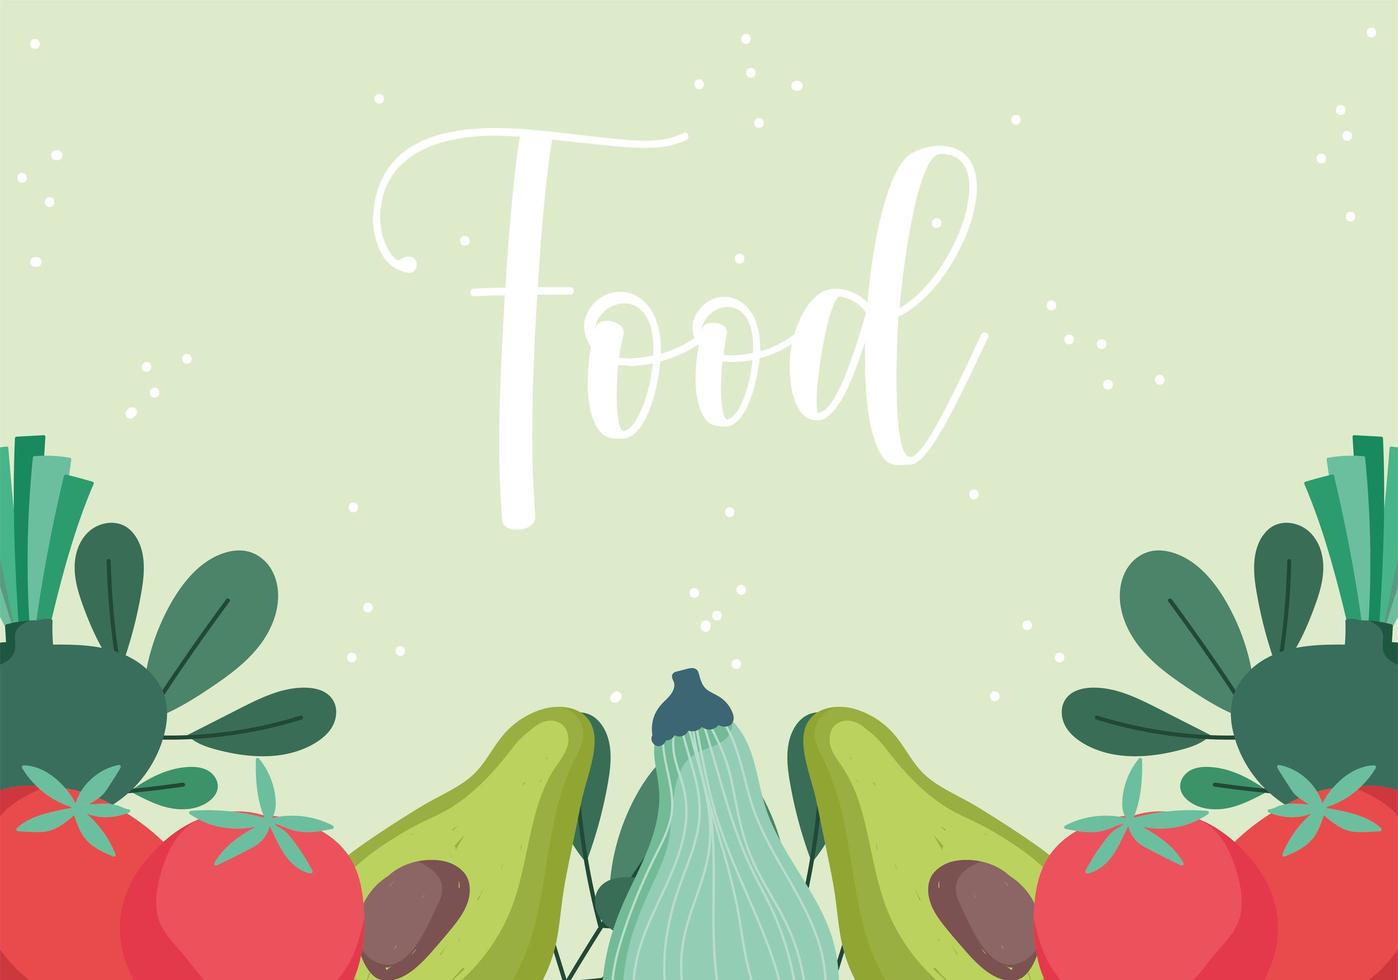 voedselpatroon met avocado-tomaat, pompoen en kruidenontwerp vector